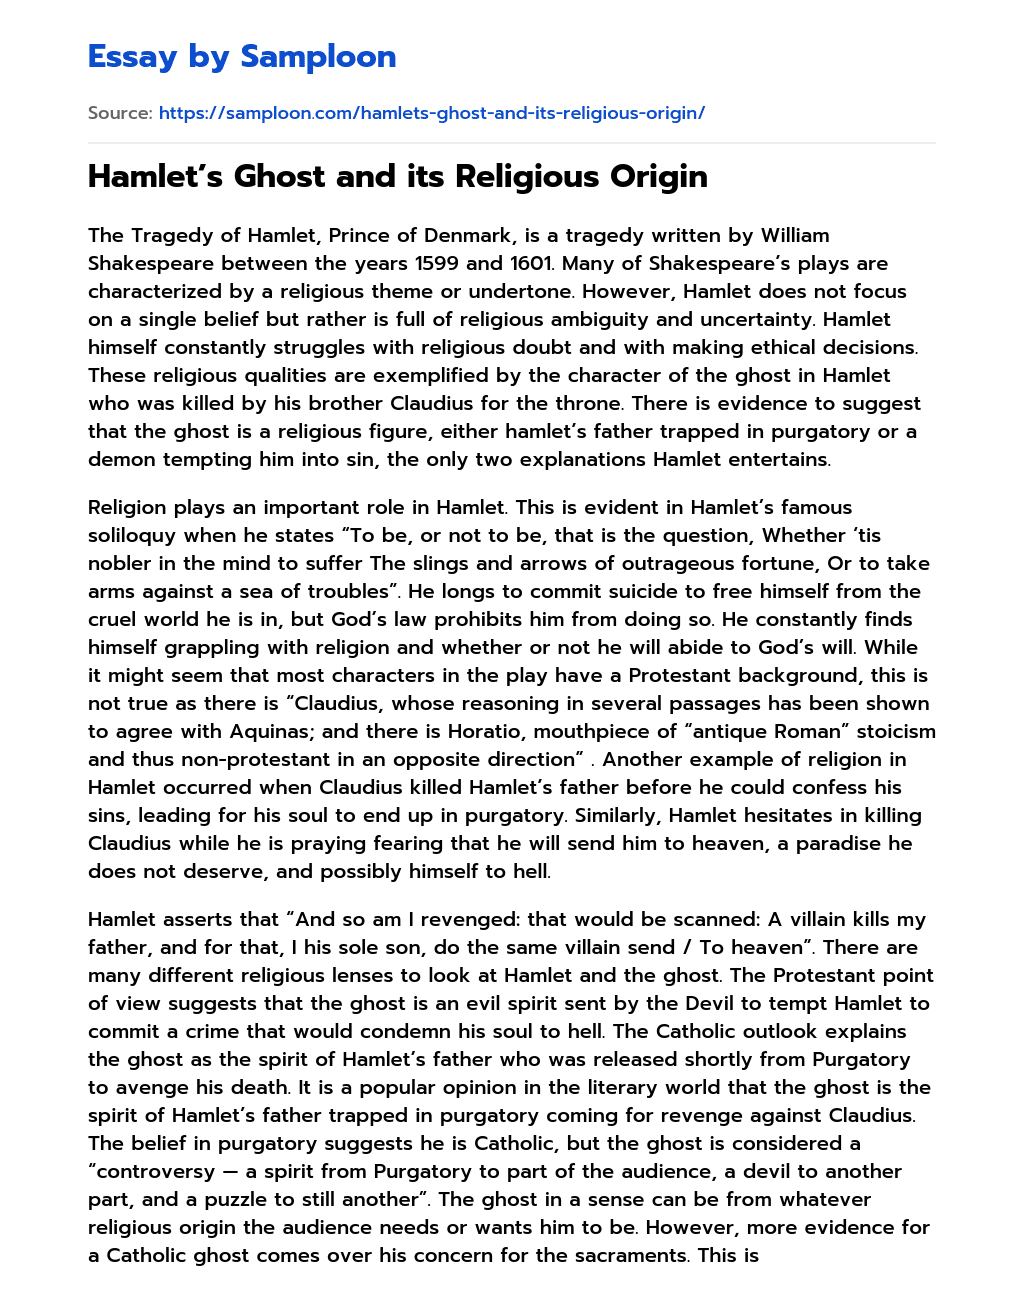 Hamlet’s Ghost and its Religious Origin essay